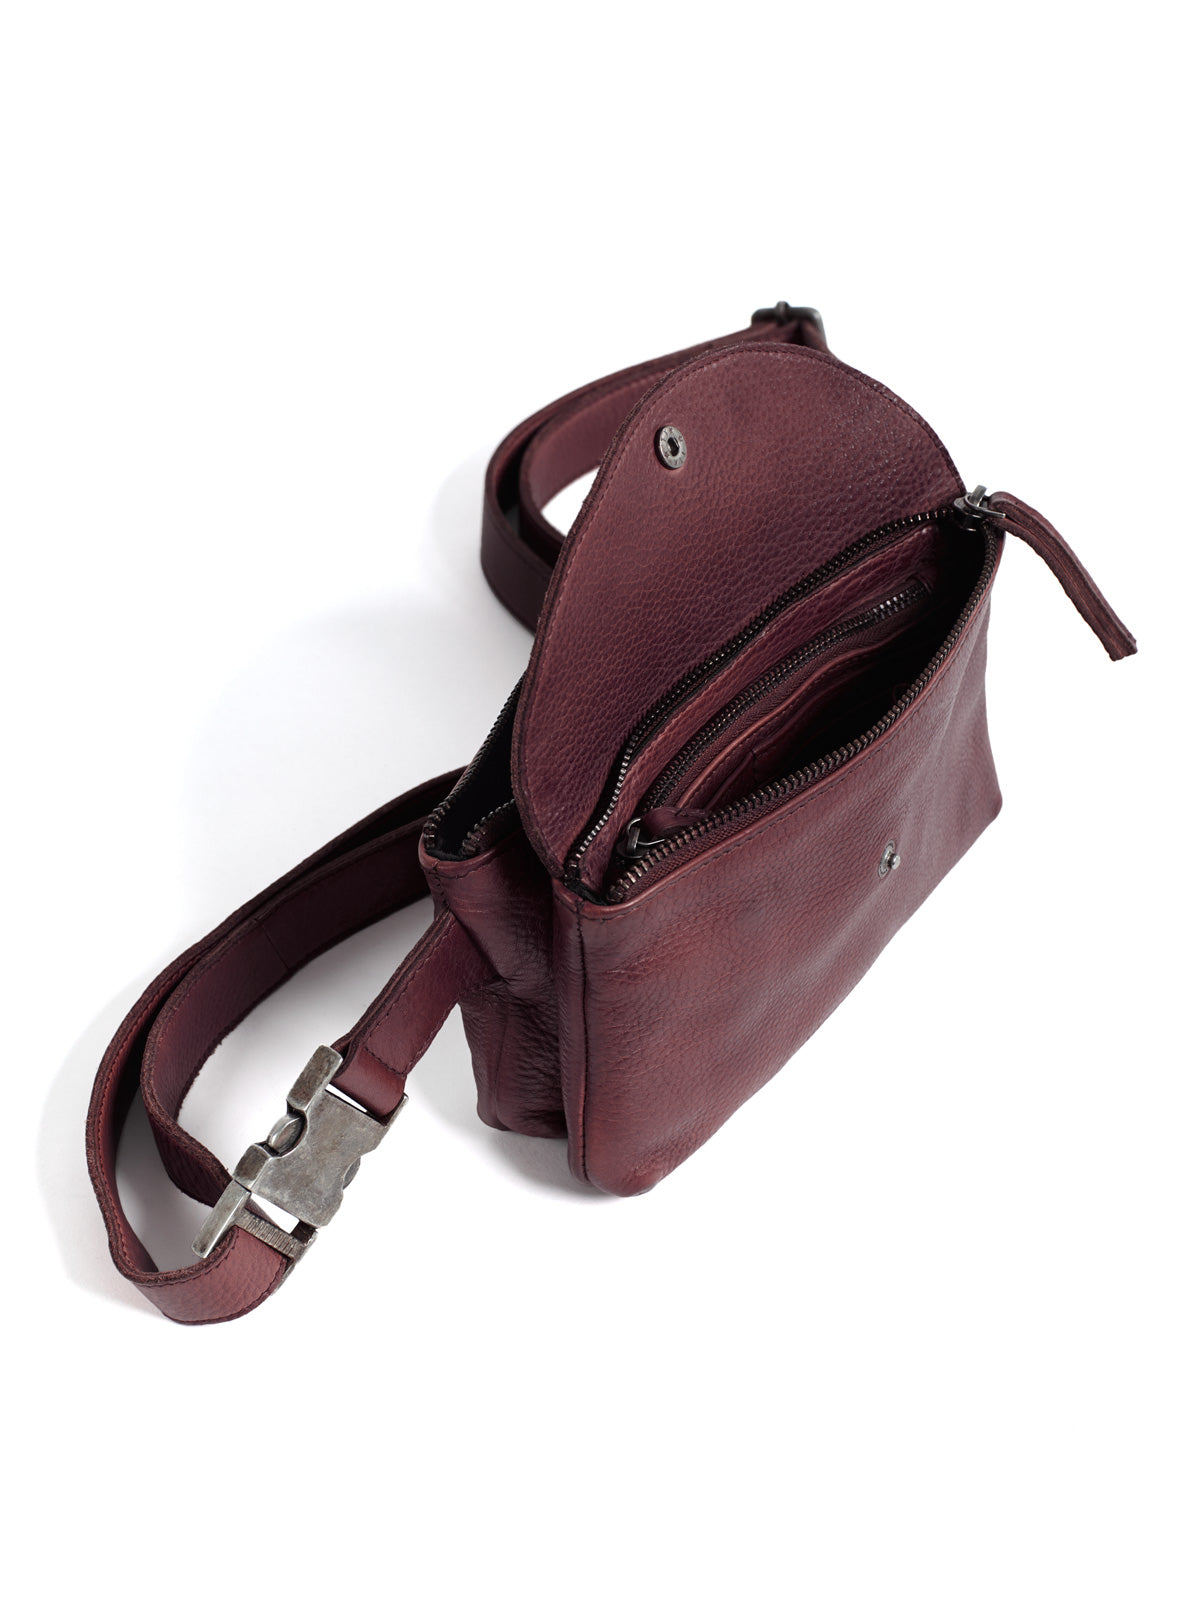 Indio Leather Belt Bag